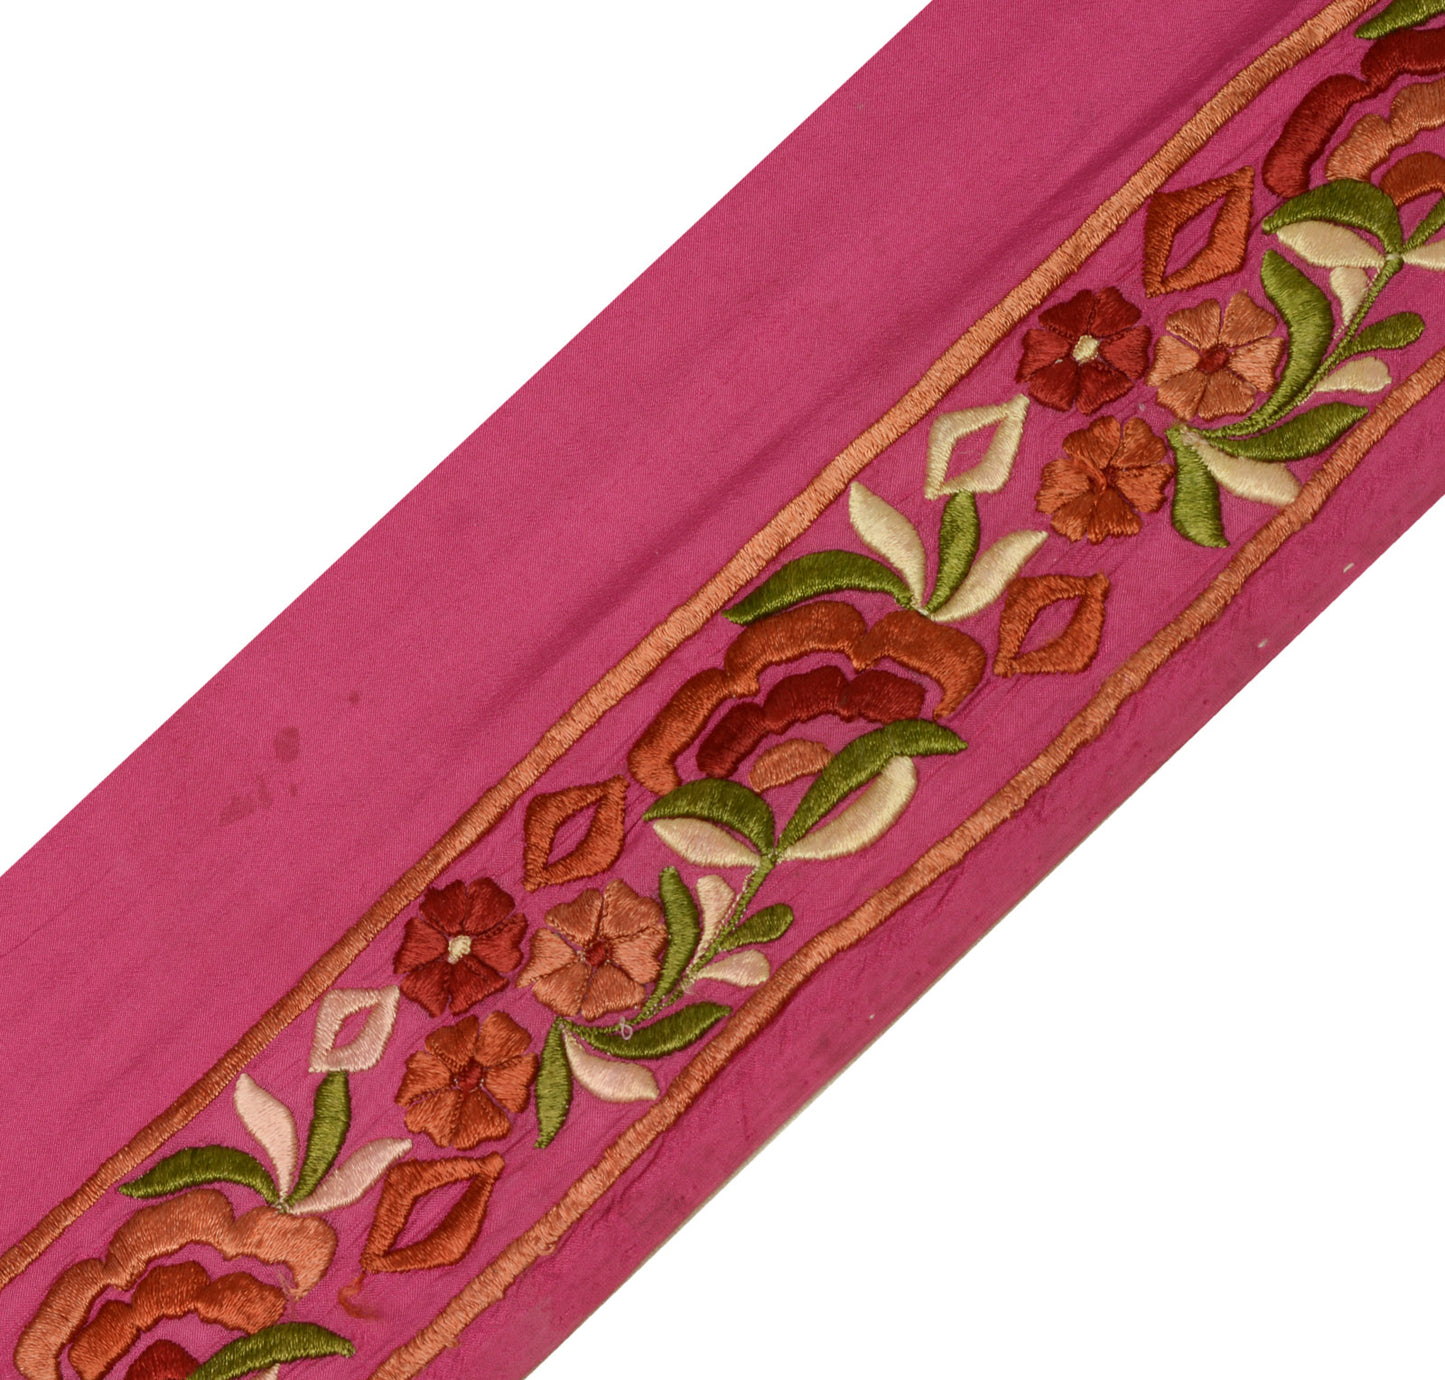 Sushila Vintage Hot Pink Sari Border Craft Sewing Trim Embroidered Lace Ribbon